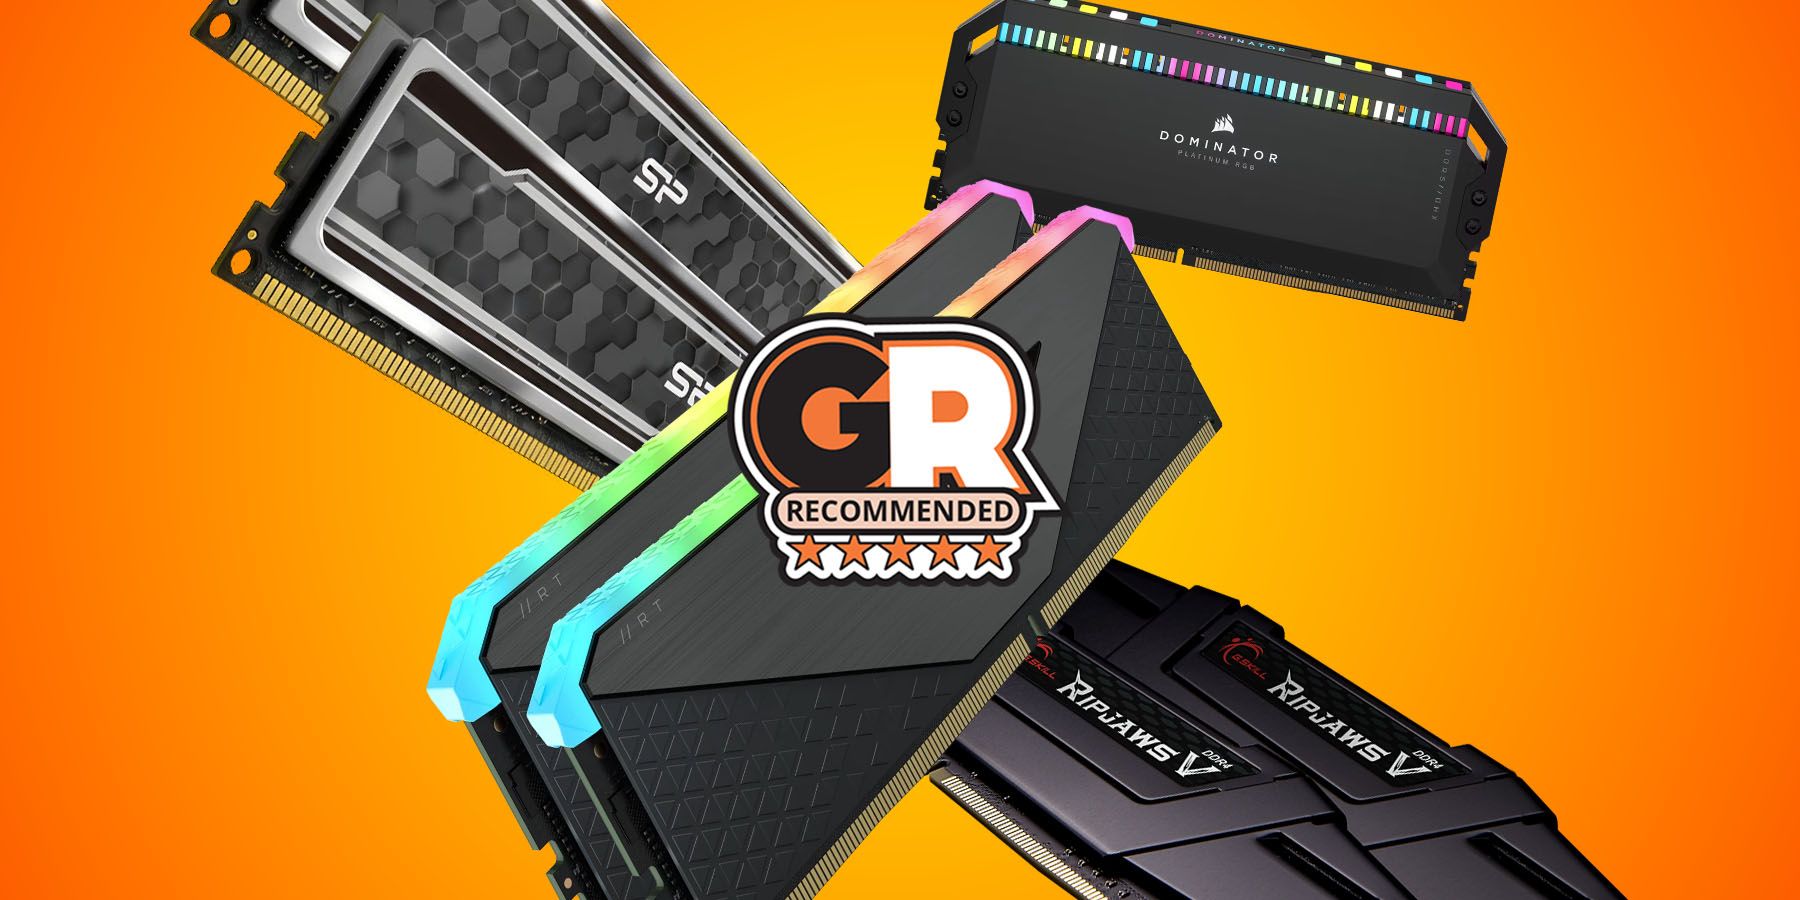  Buy Silicon Power Value Gaming DDR4 RAM 16GB (8GBx2